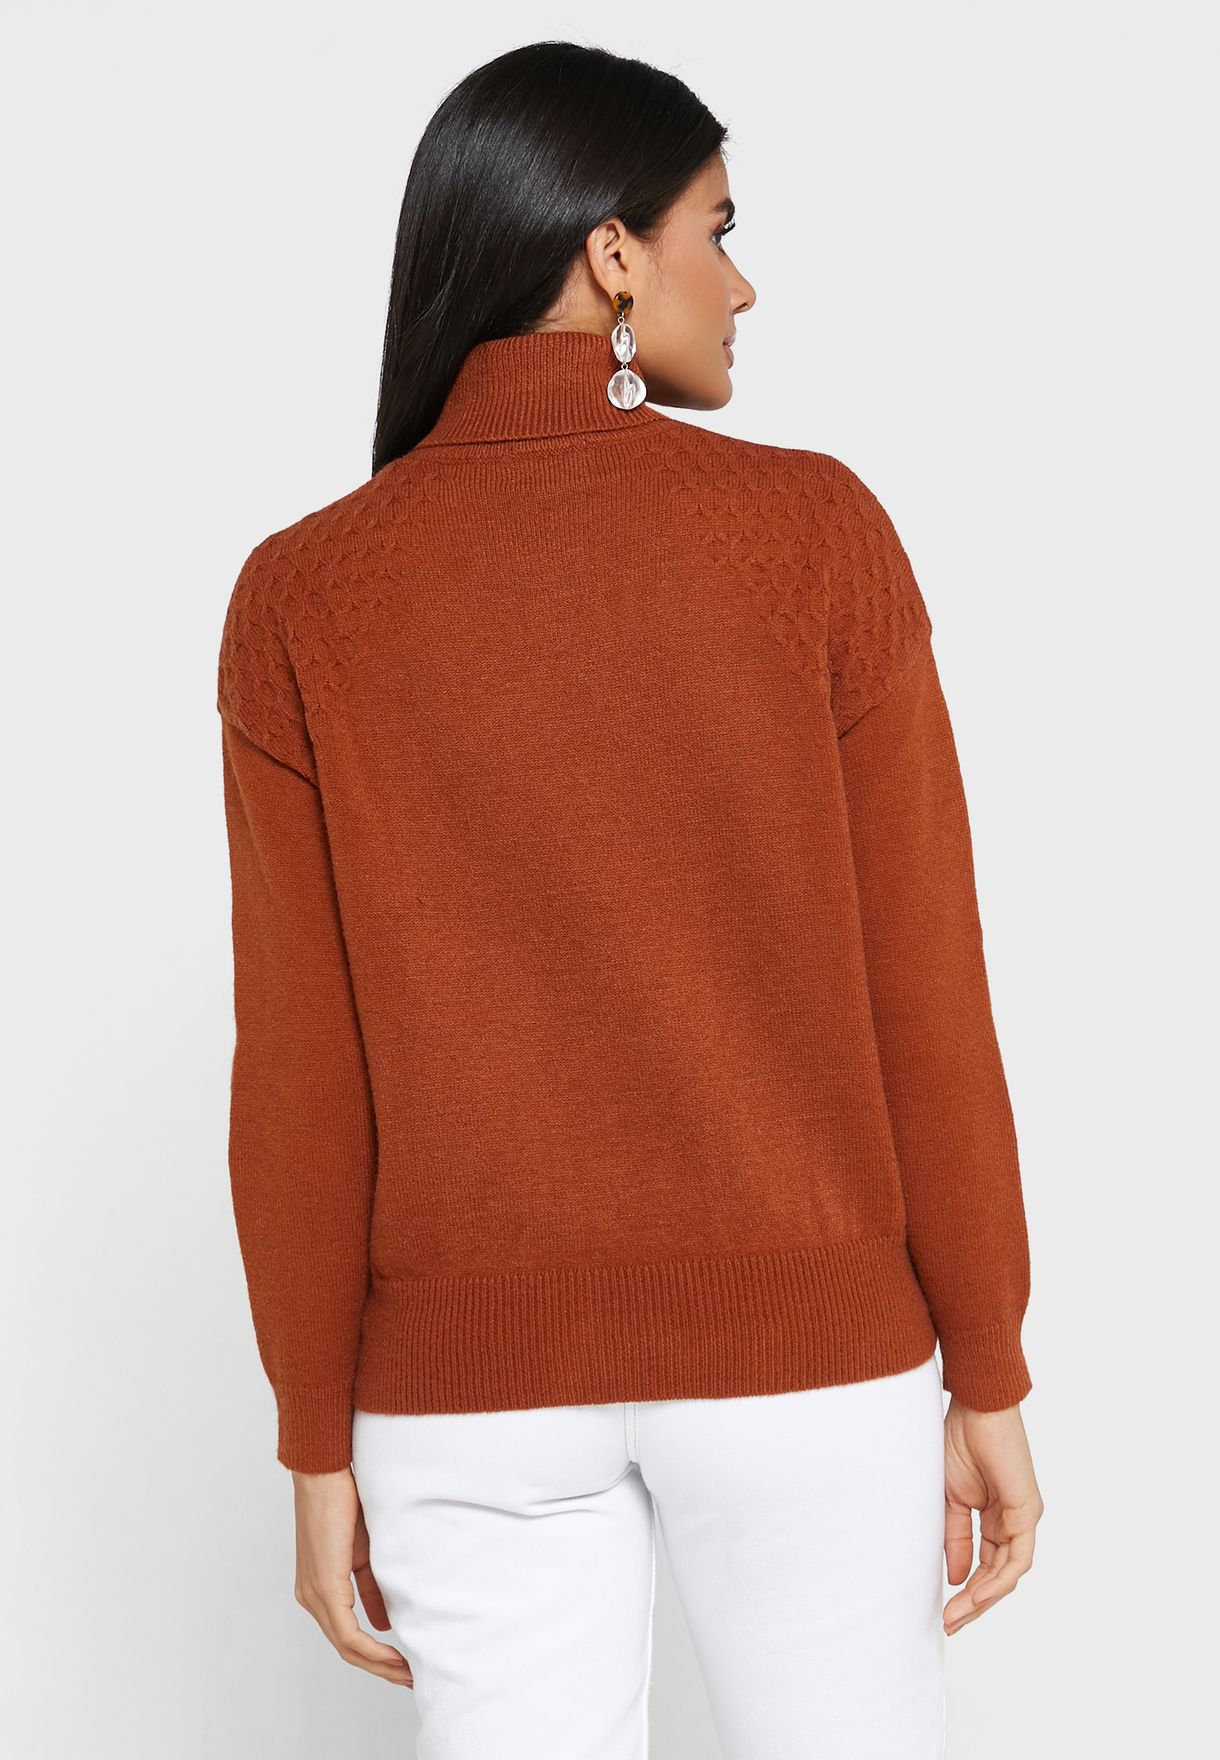 Self Pattern Turtleneck Sweater